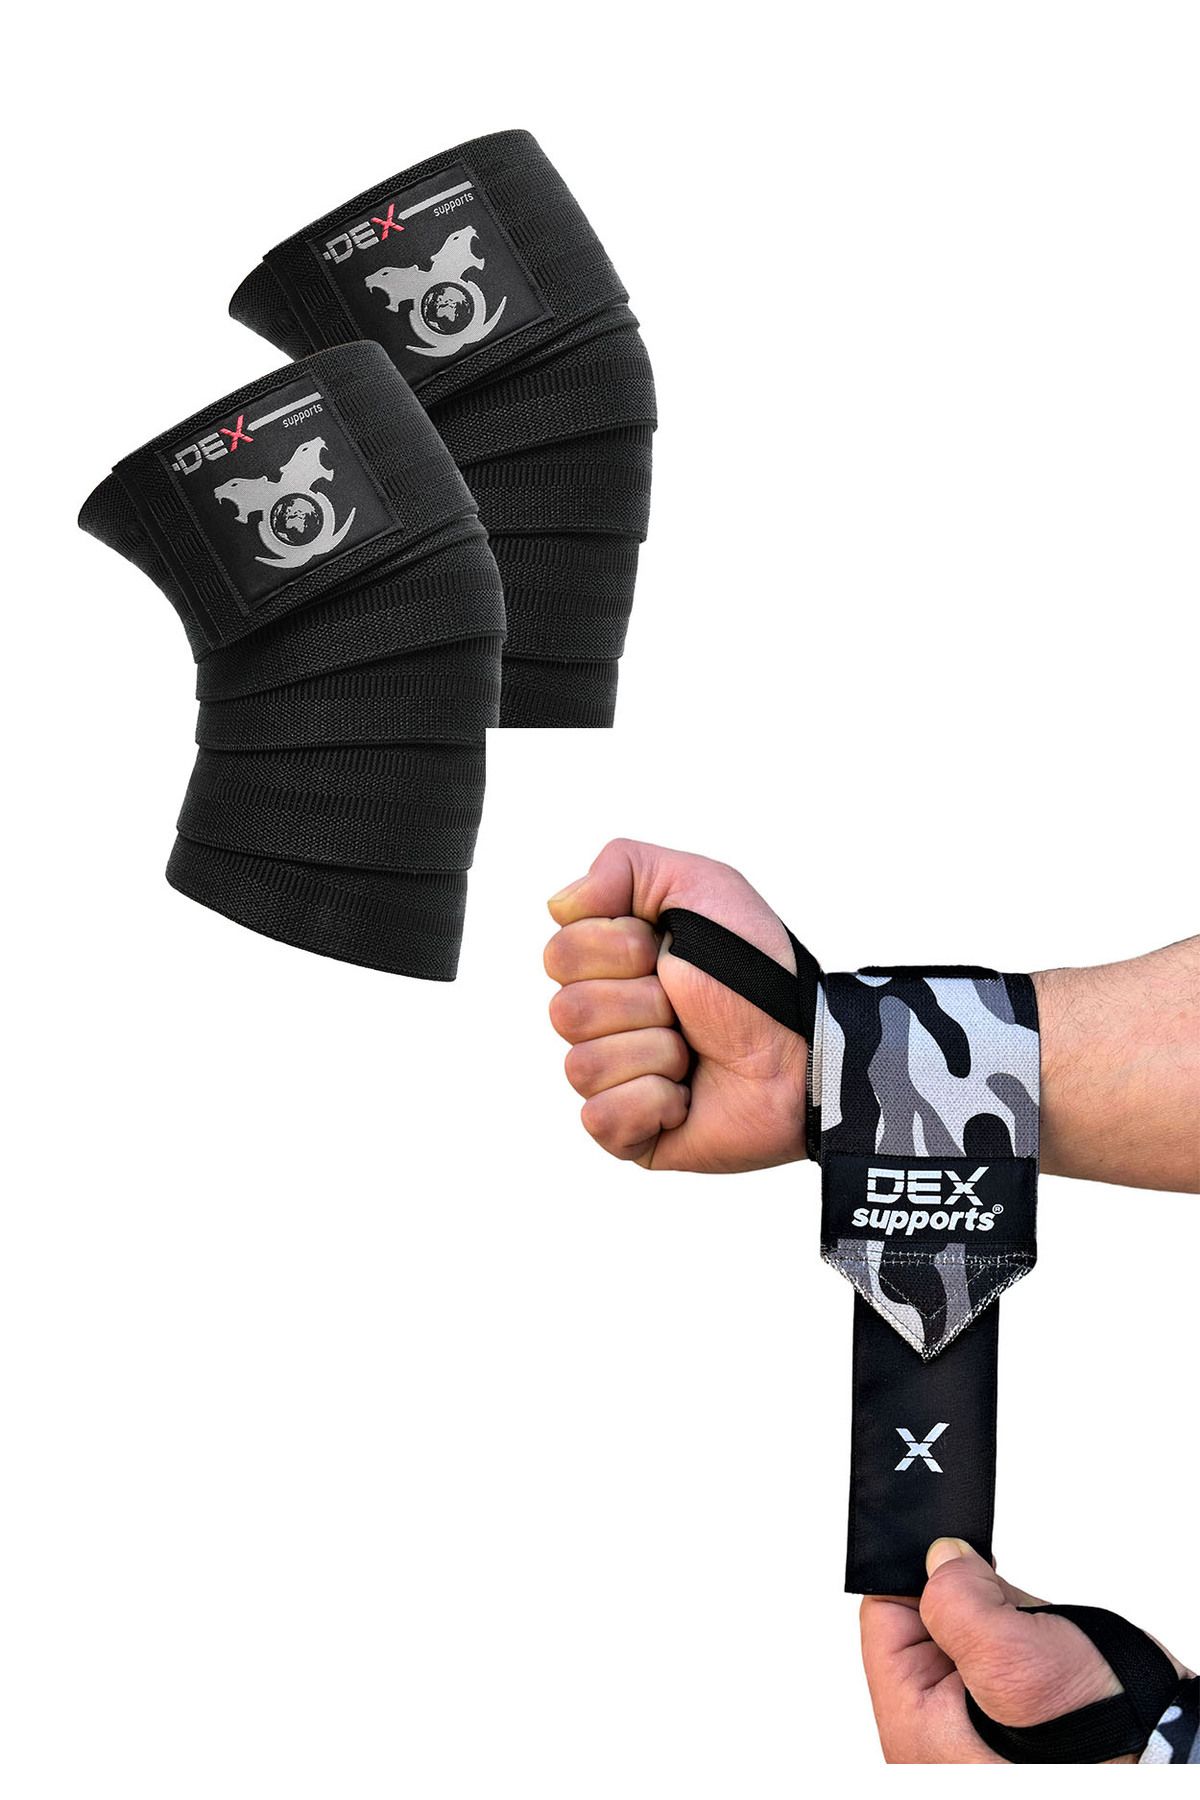 Dex Supports Lasting Energy Spor Dizlik - Knee Wraps  Legend Series - Wrist Wraps Kamuflaj 2'li Set